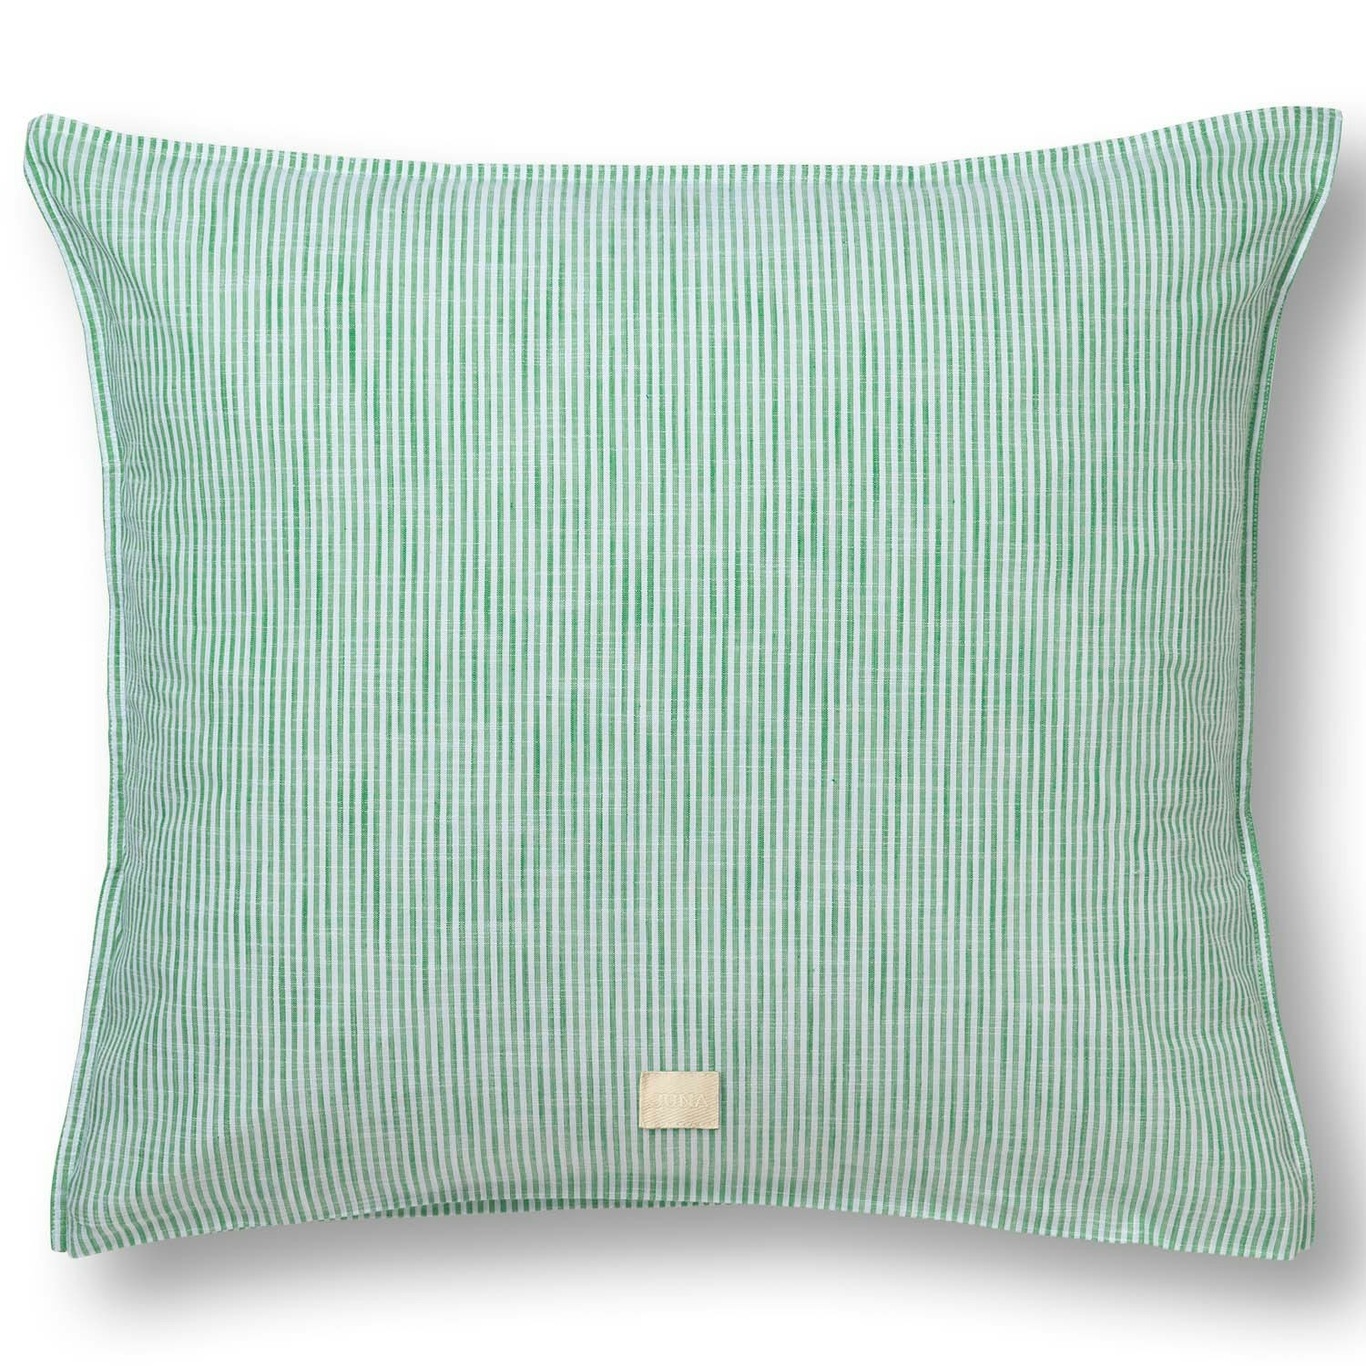 Monochrome Lines Pillowcase 50x60 cm, Green